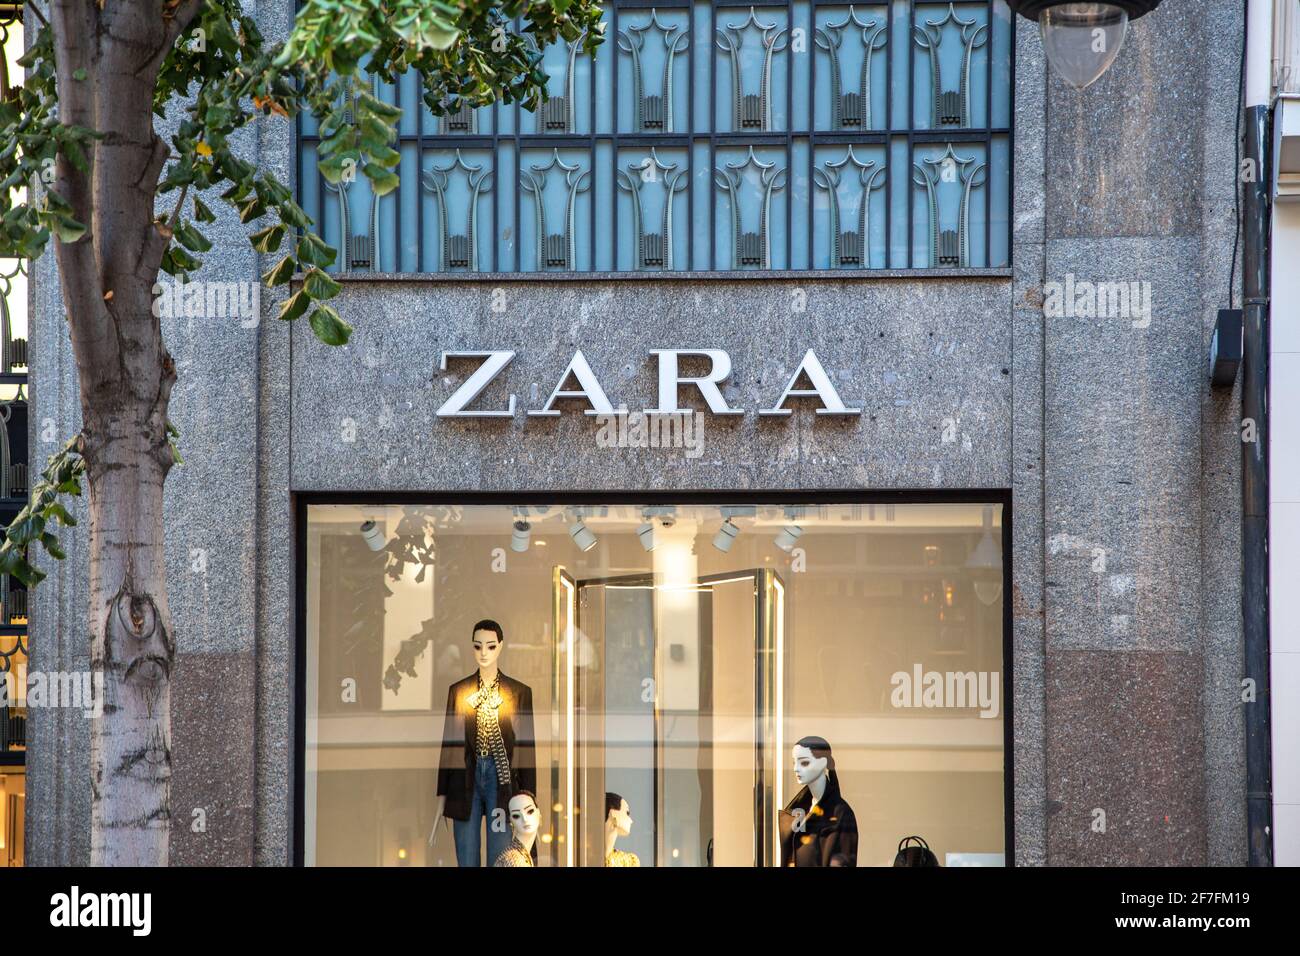 Zara shop front Immagini e Fotos Stock - Alamy